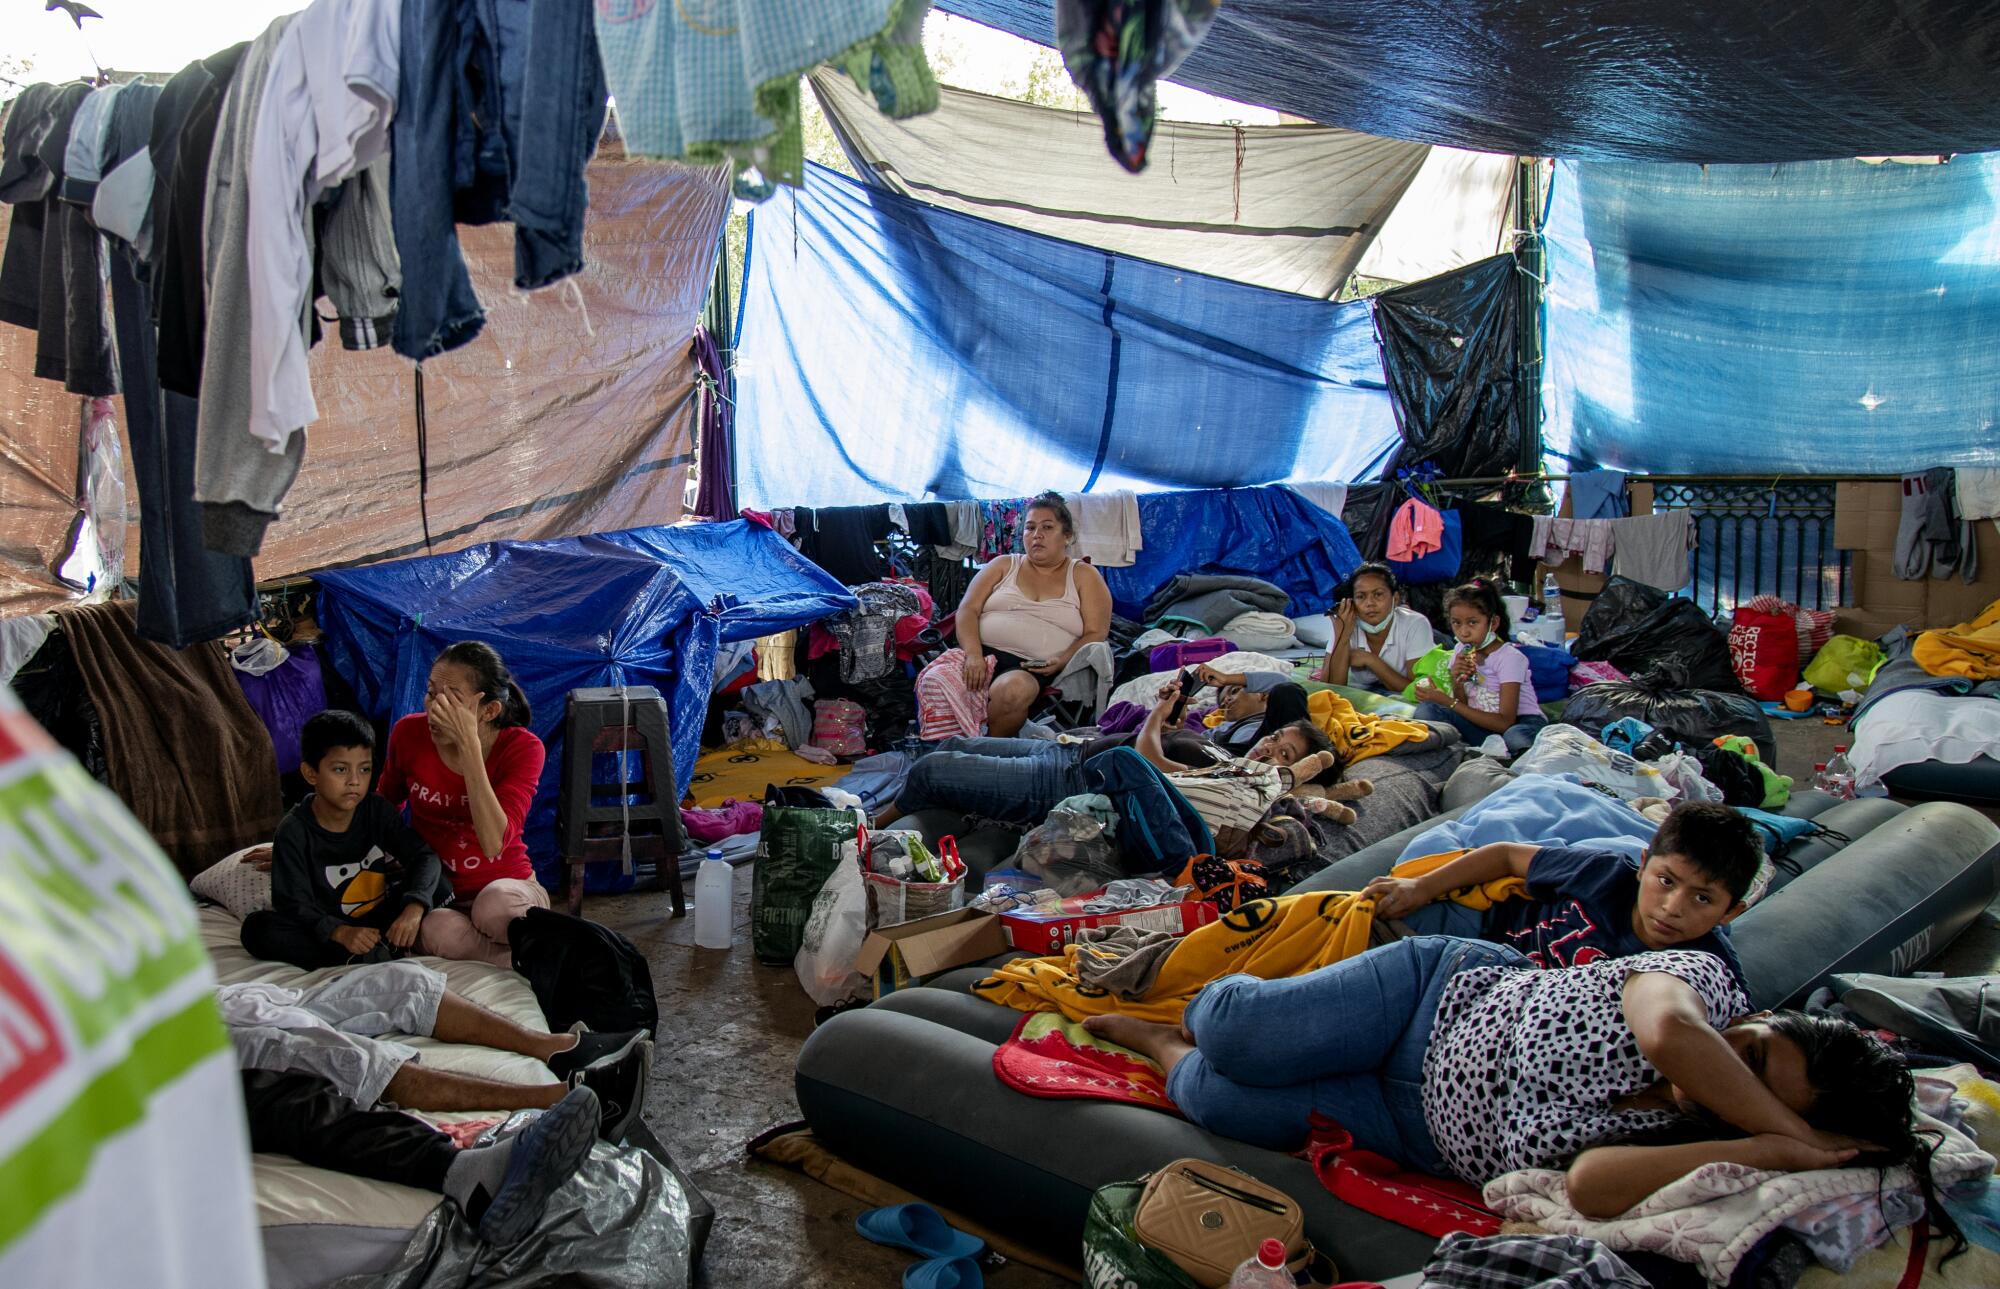 Asylum seekers sleep on air mattresses under tarps